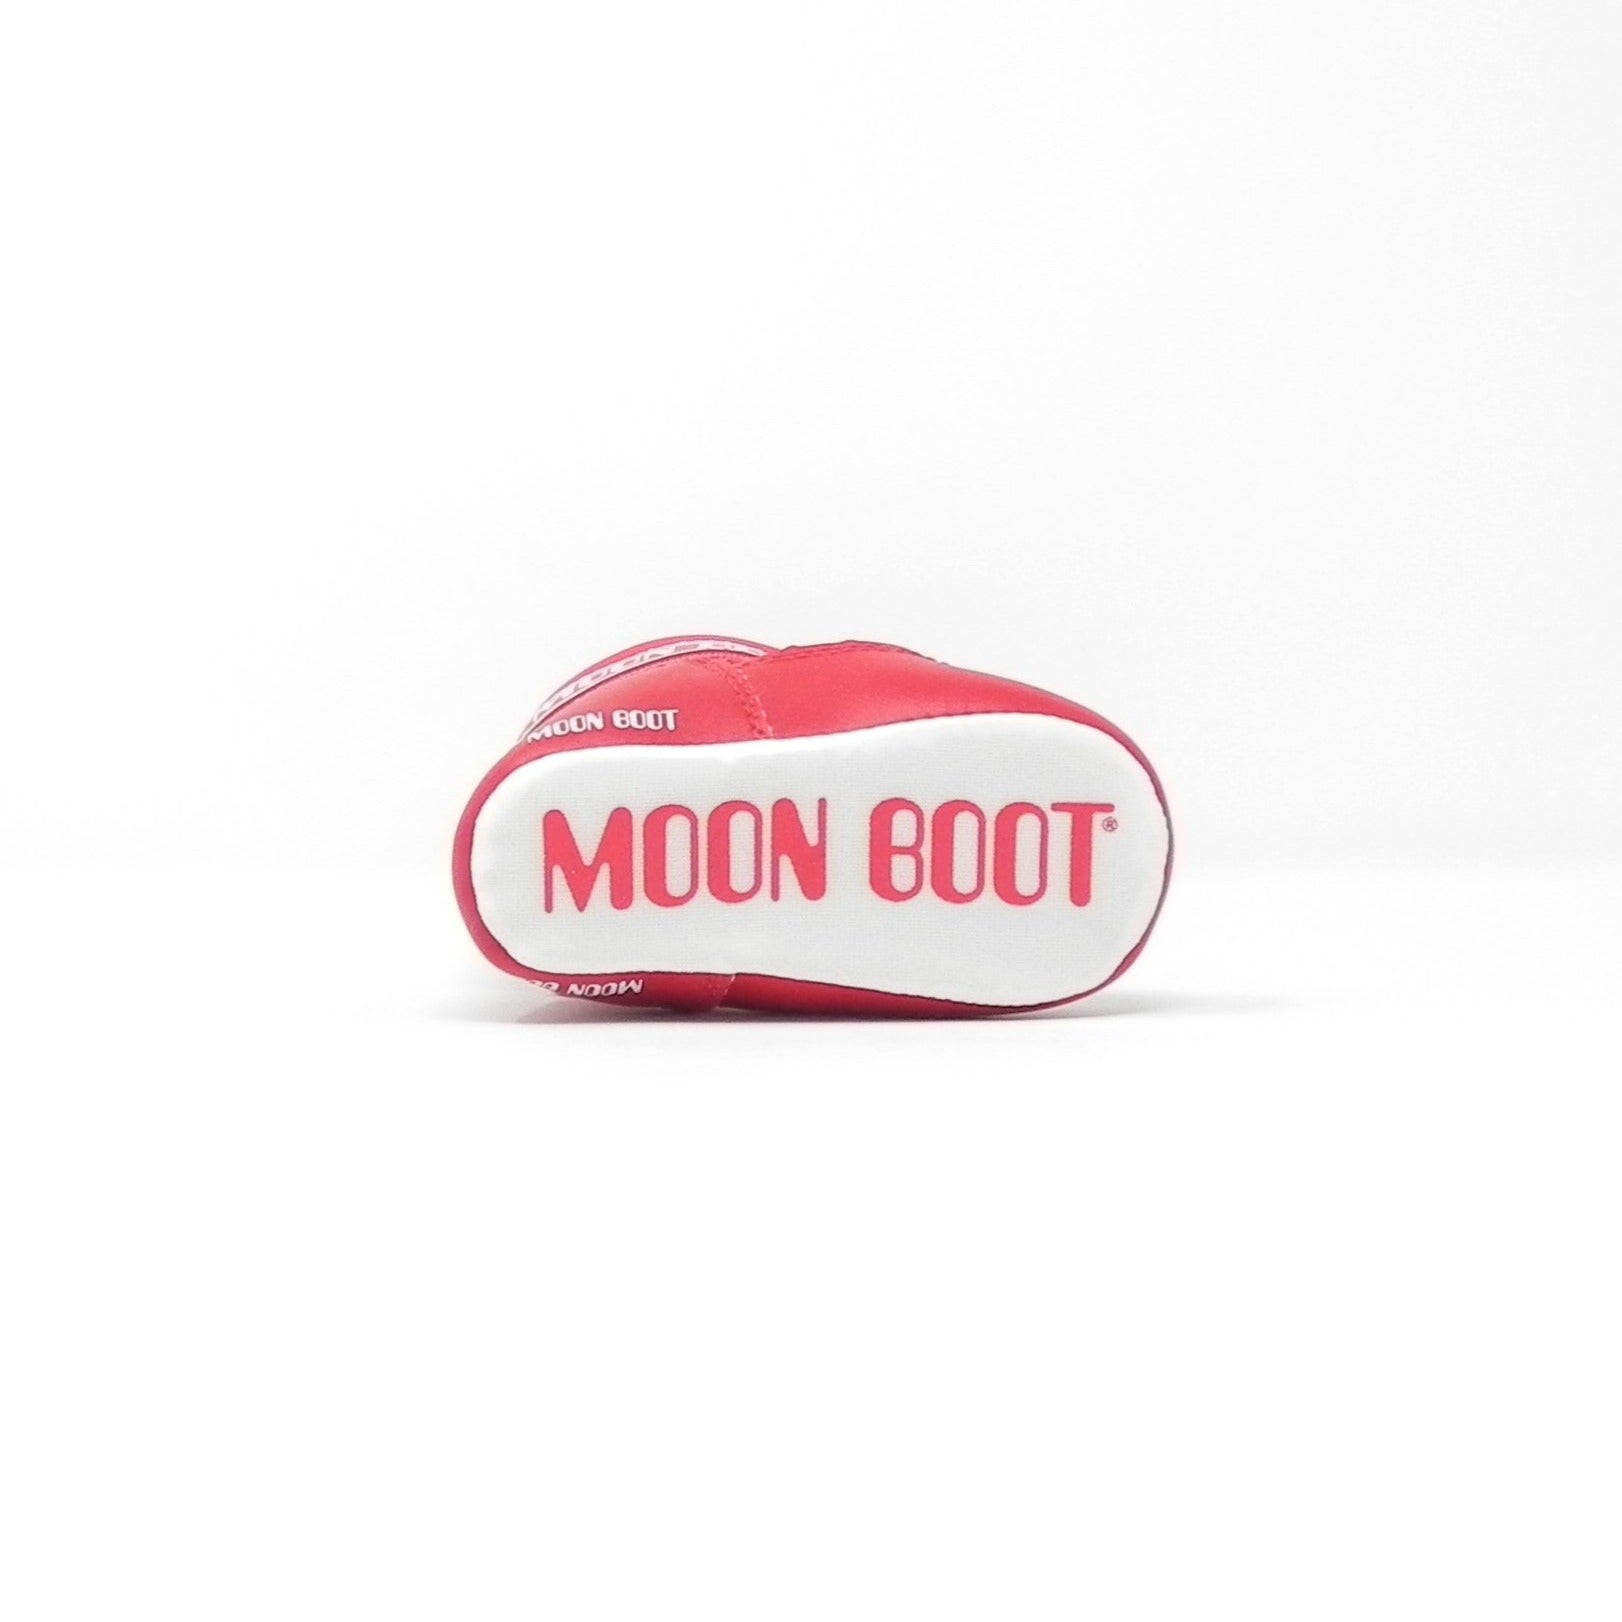 MOON BOOT - Moon Boot bebè